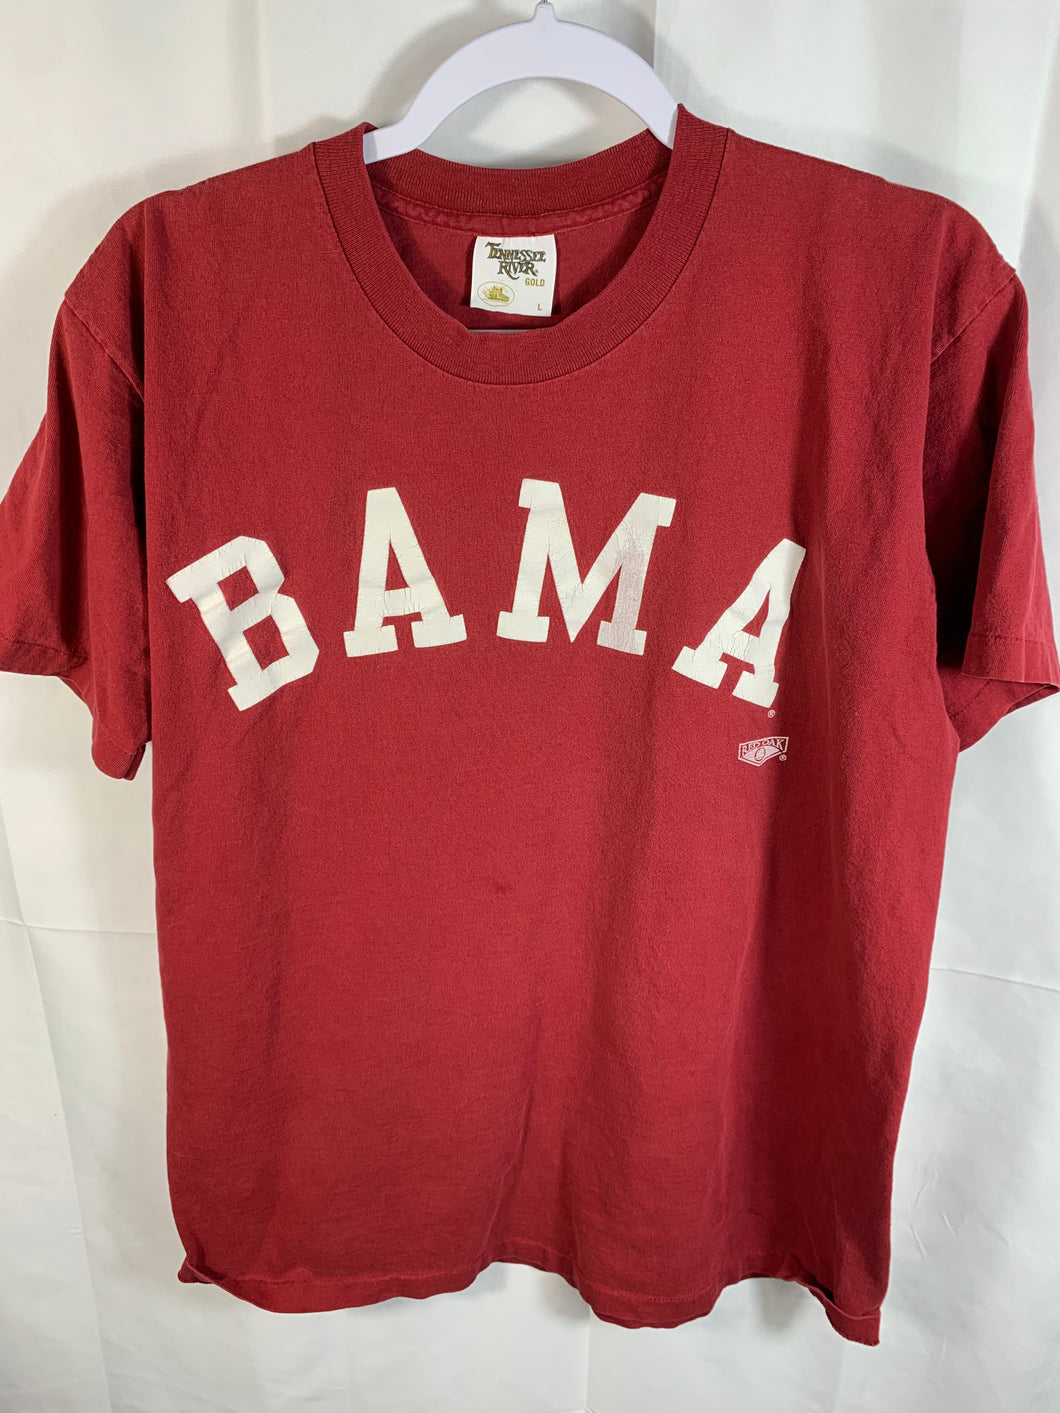 Vintage Bama Spellout T-Shirt Large